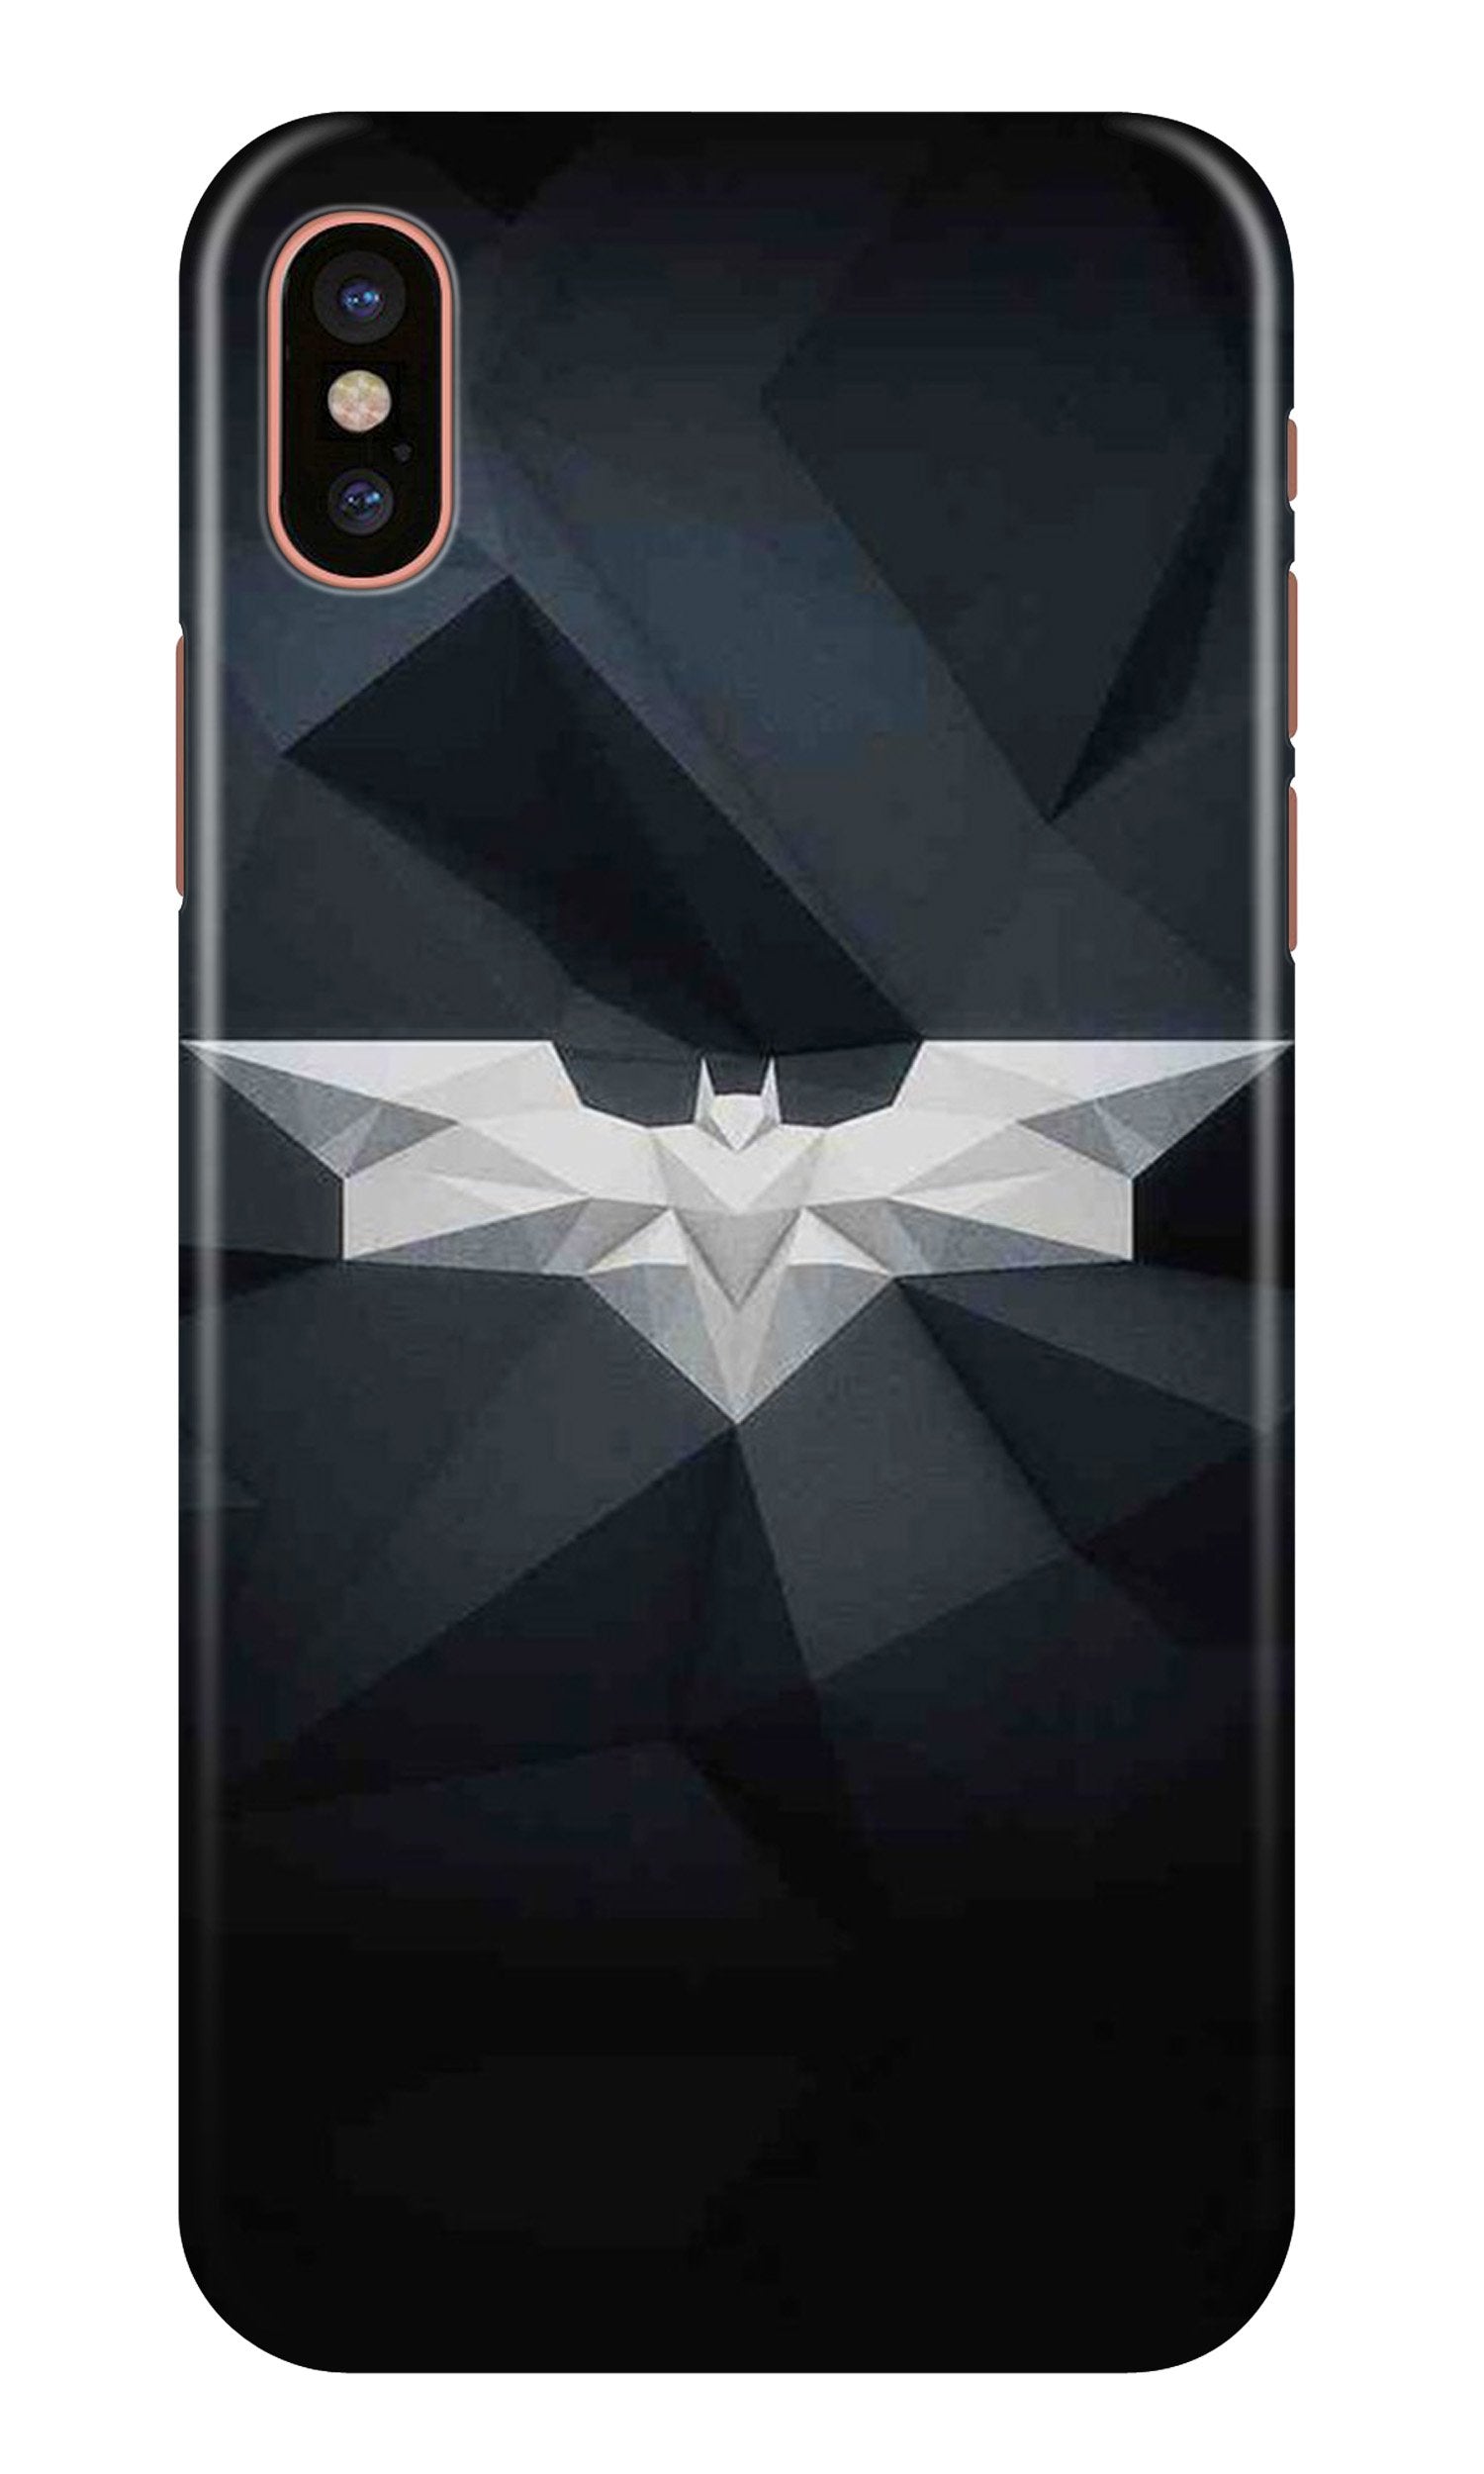 Batman Case for iPhone Xr